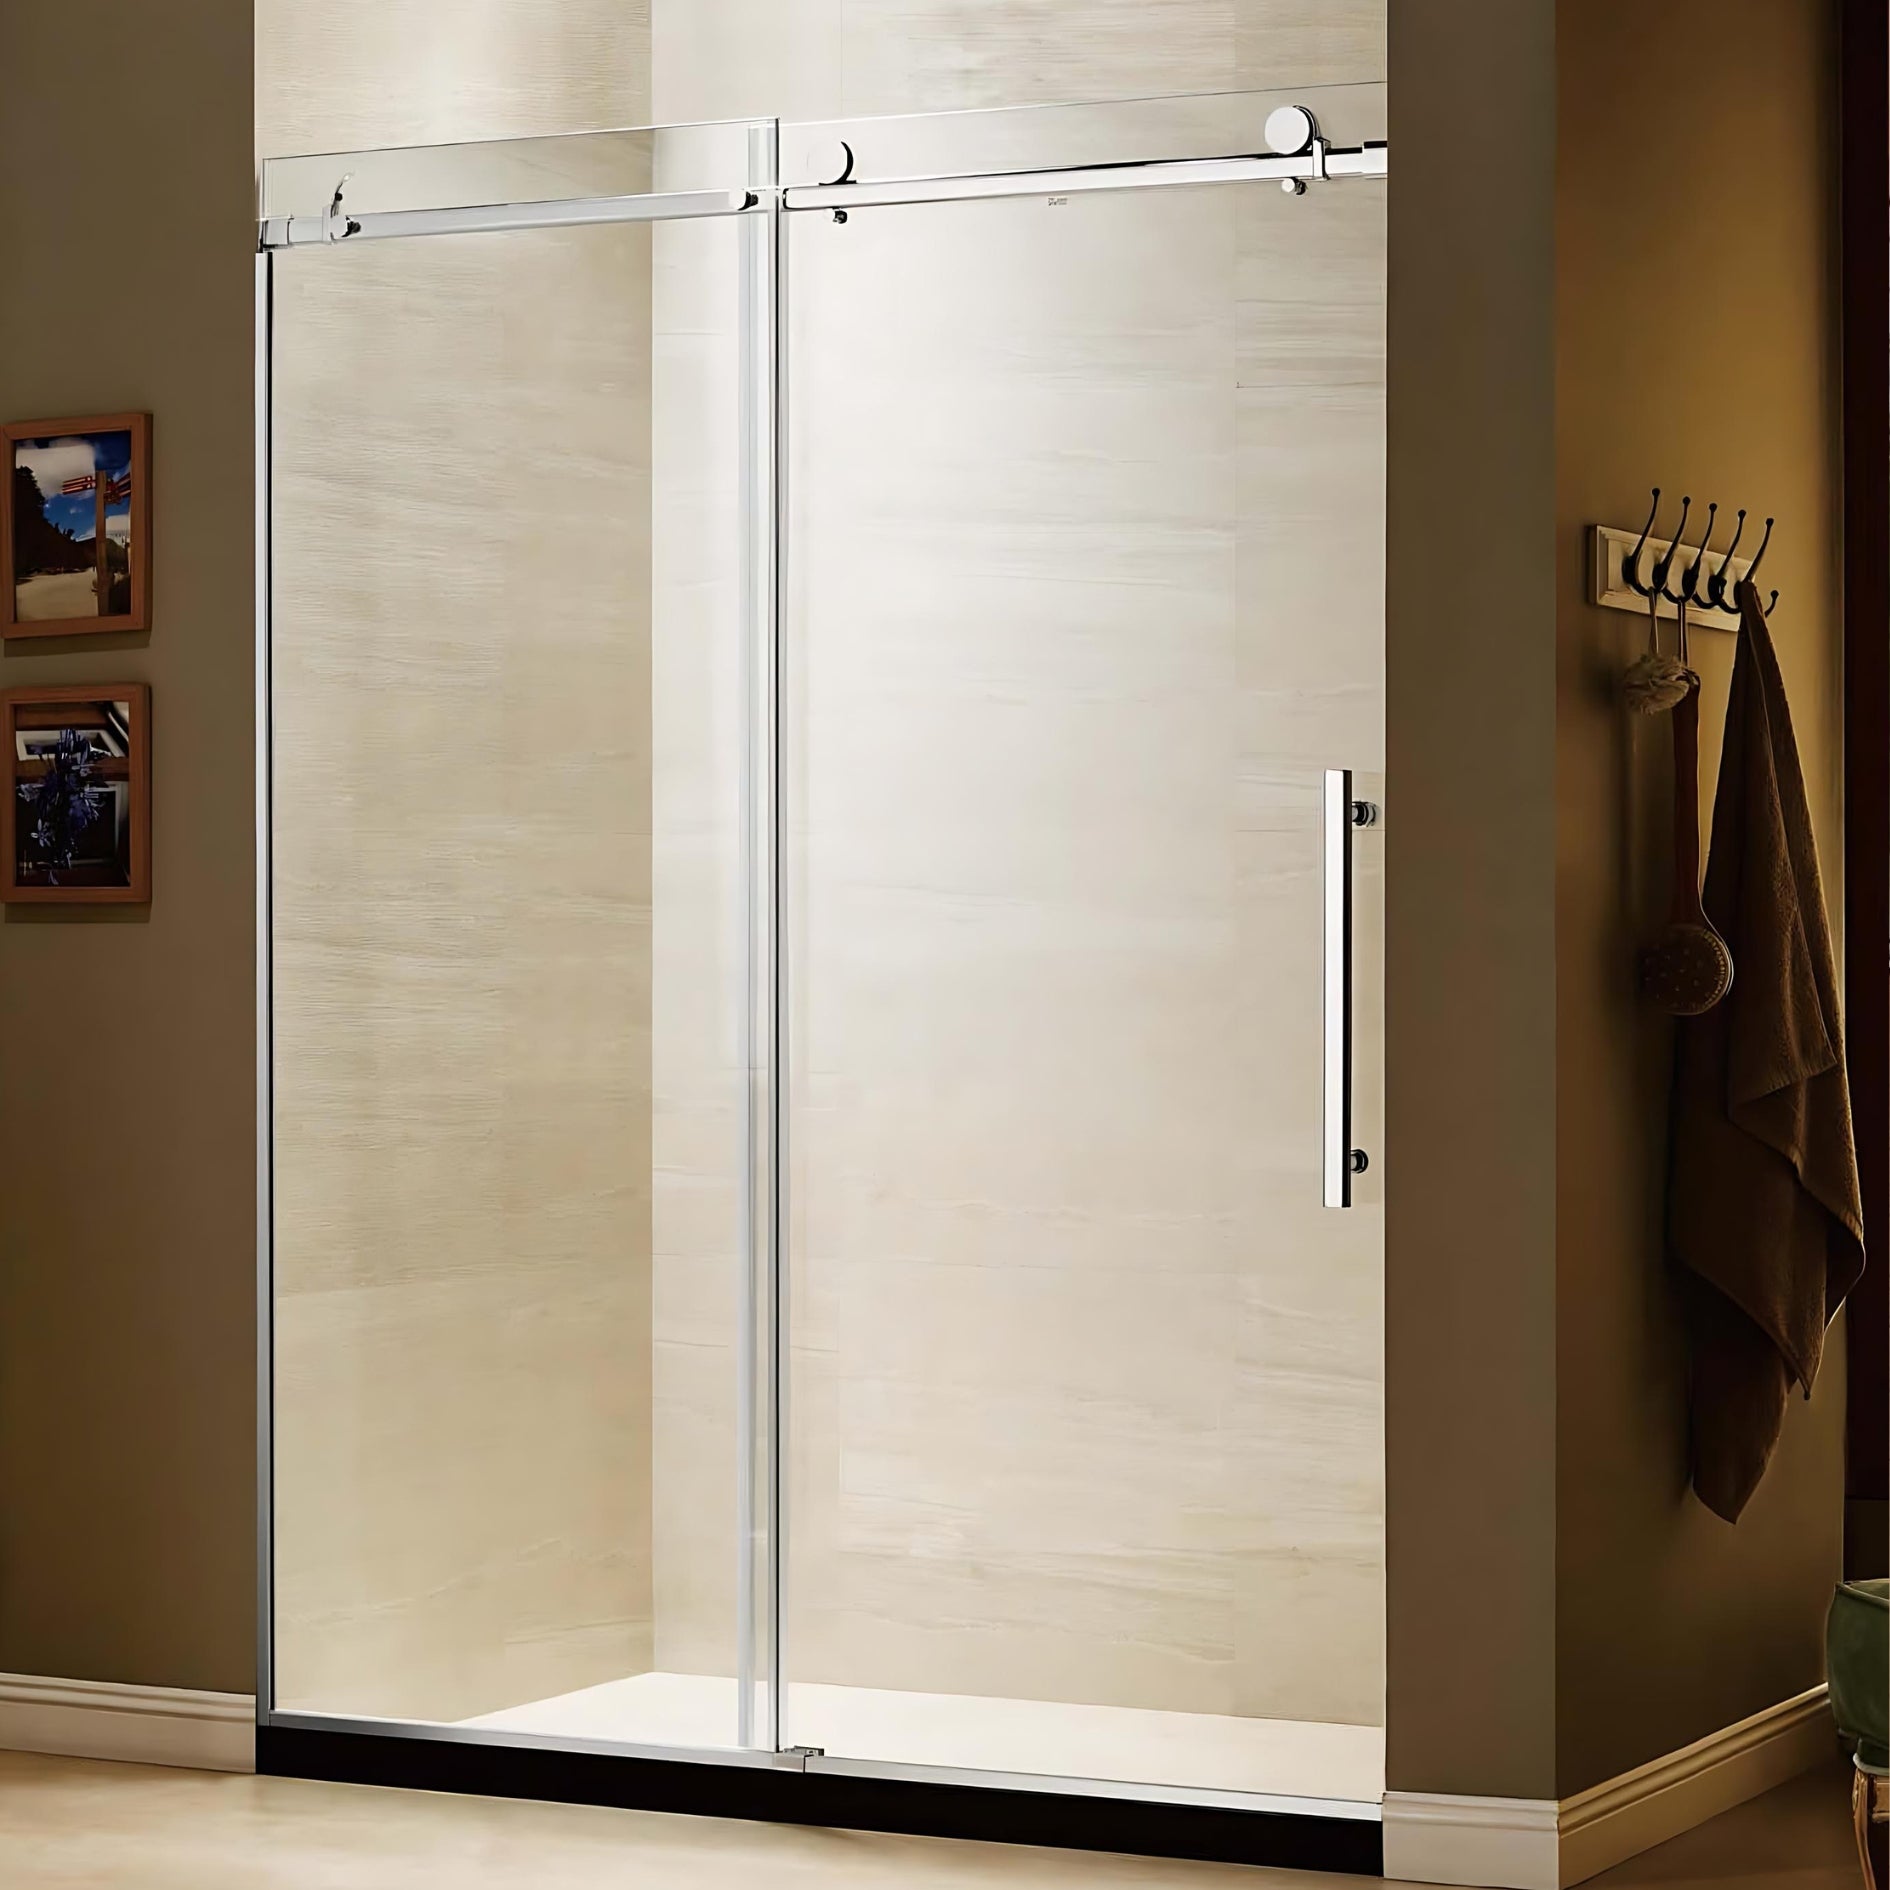 Dreamwerks 60 in. W x 79 in. H Frameless Stainless Steel Sliding Shower Door in Chrome with Clear Glass - Dreamwerks